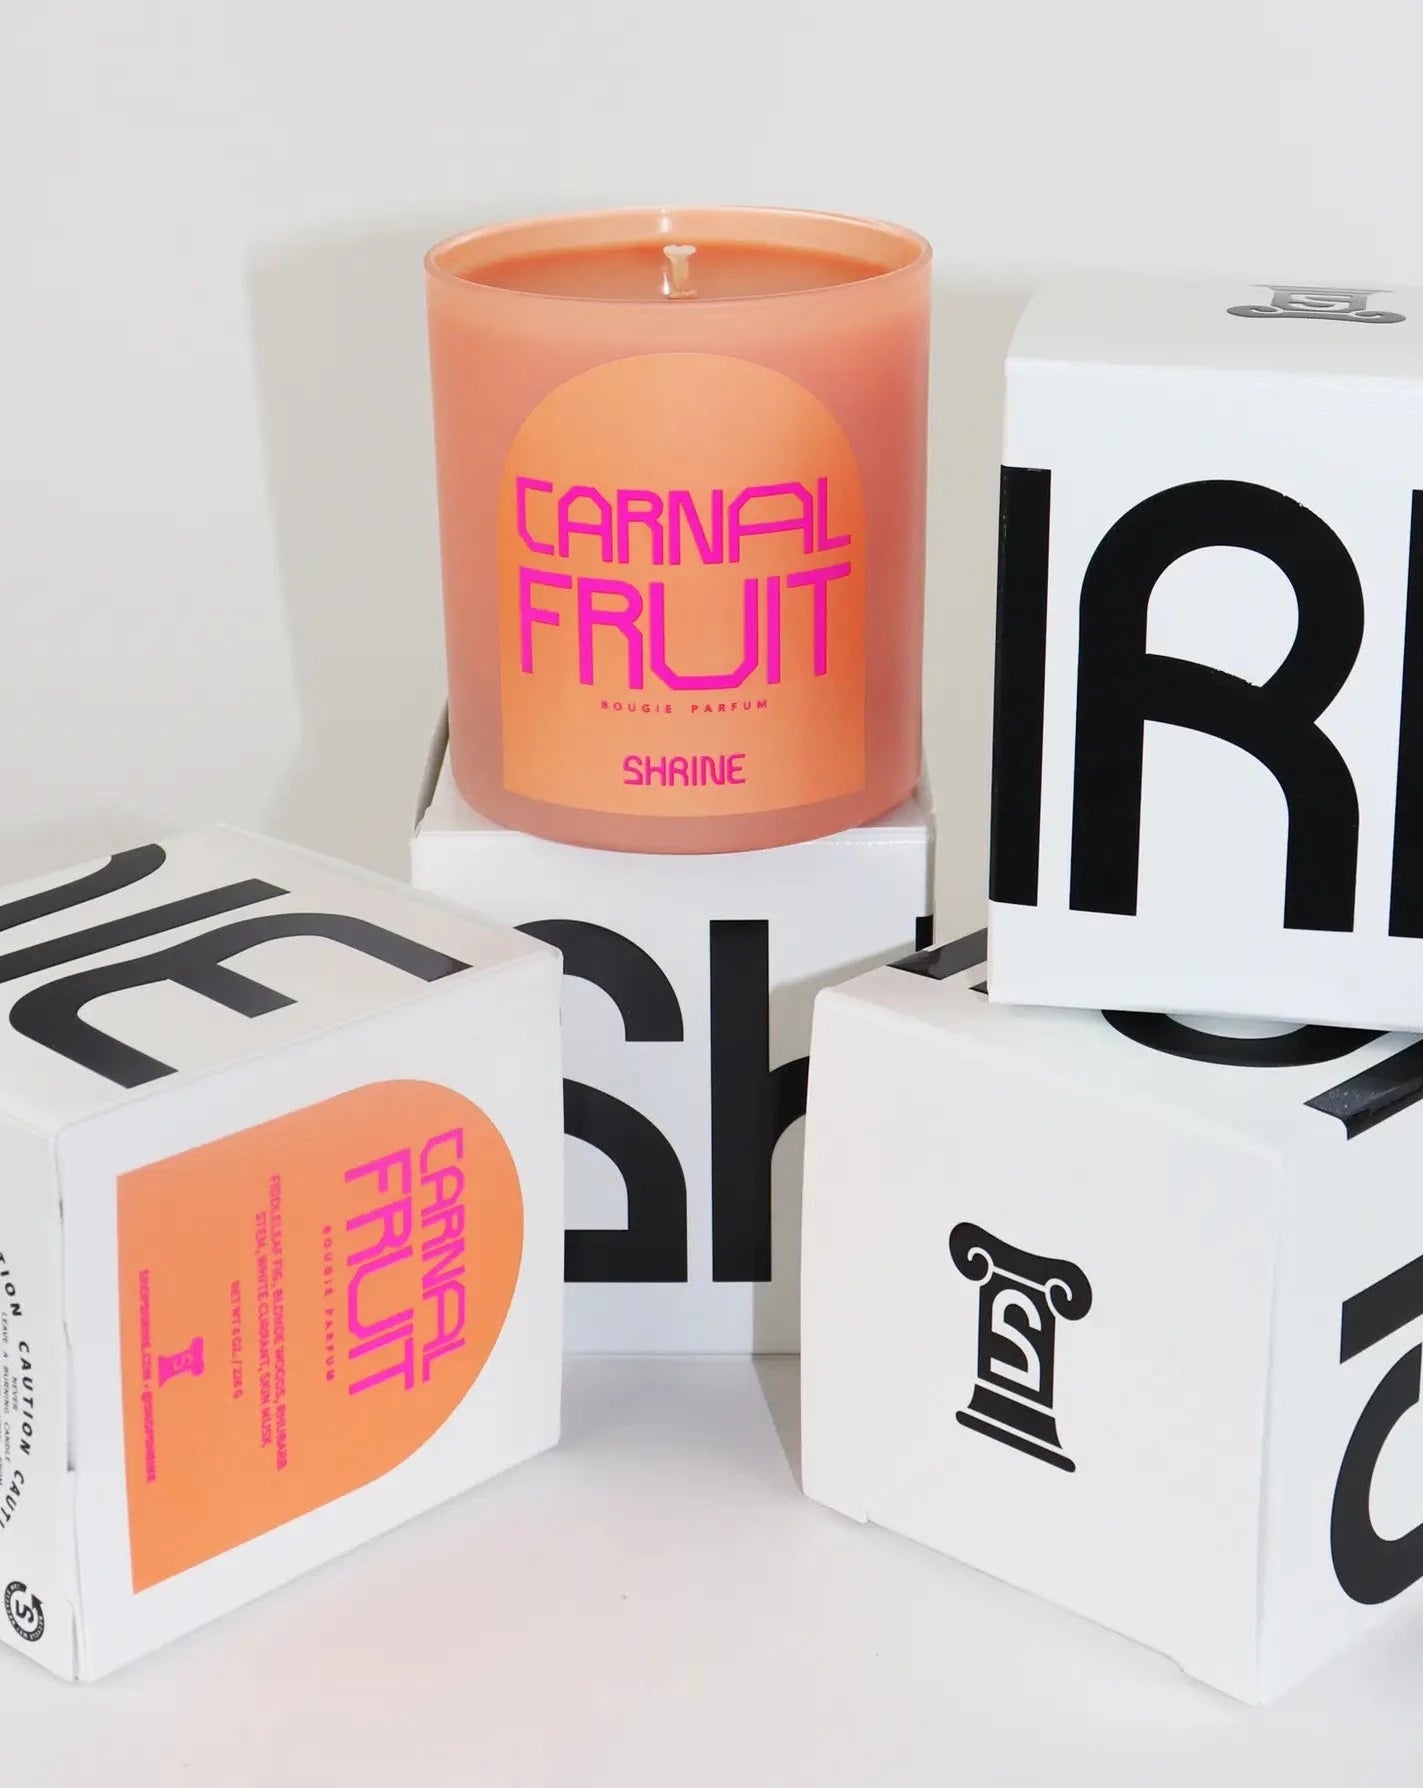 Carnal Fruit Candle